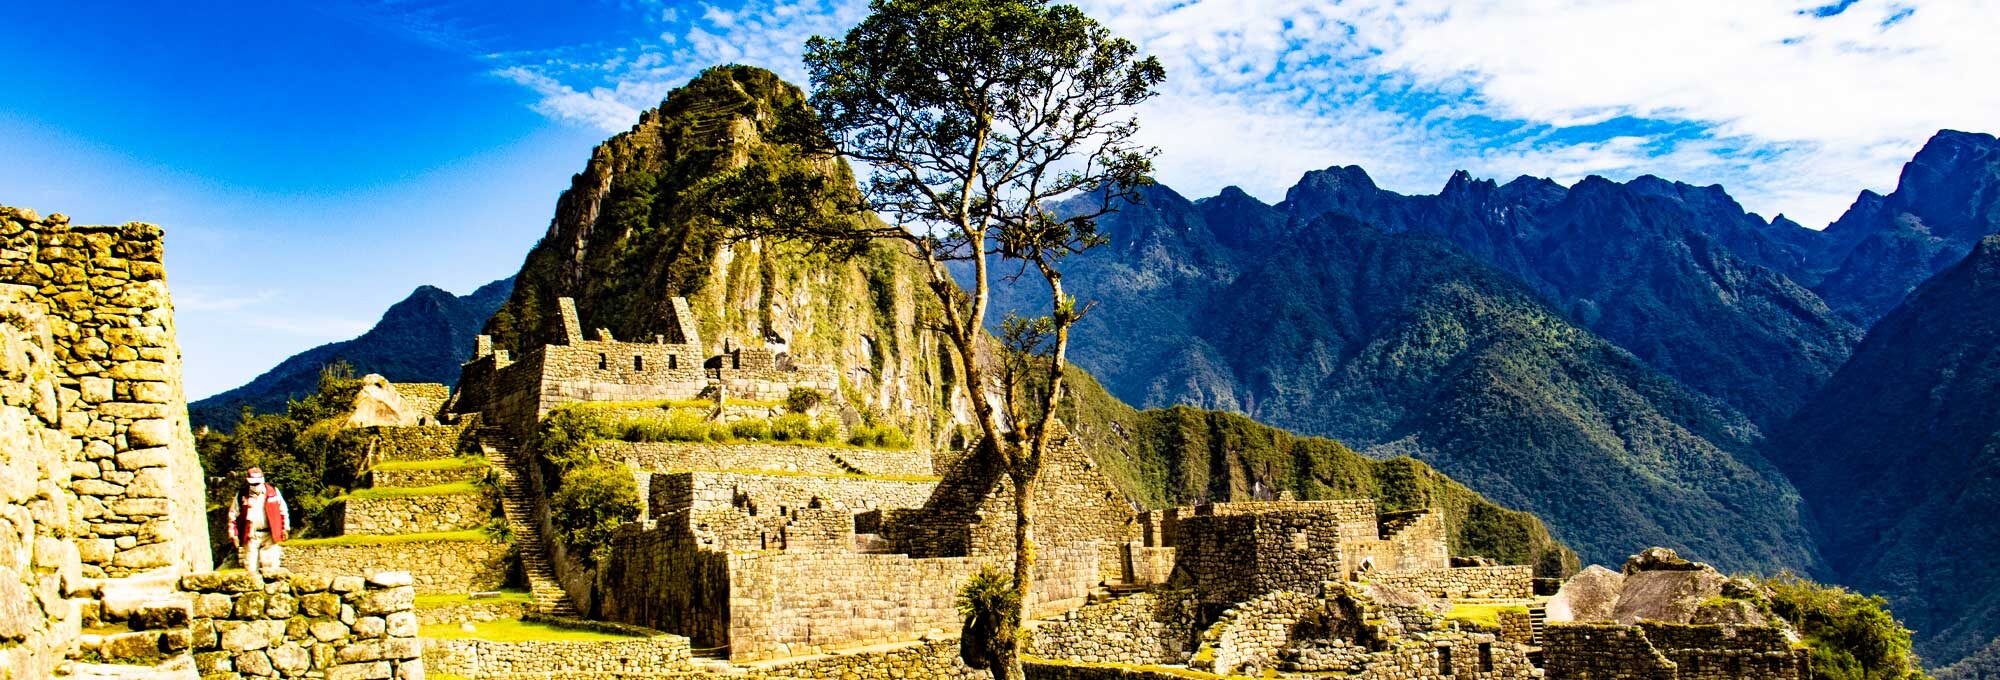 Machu Picchu Tour 1 Day by train